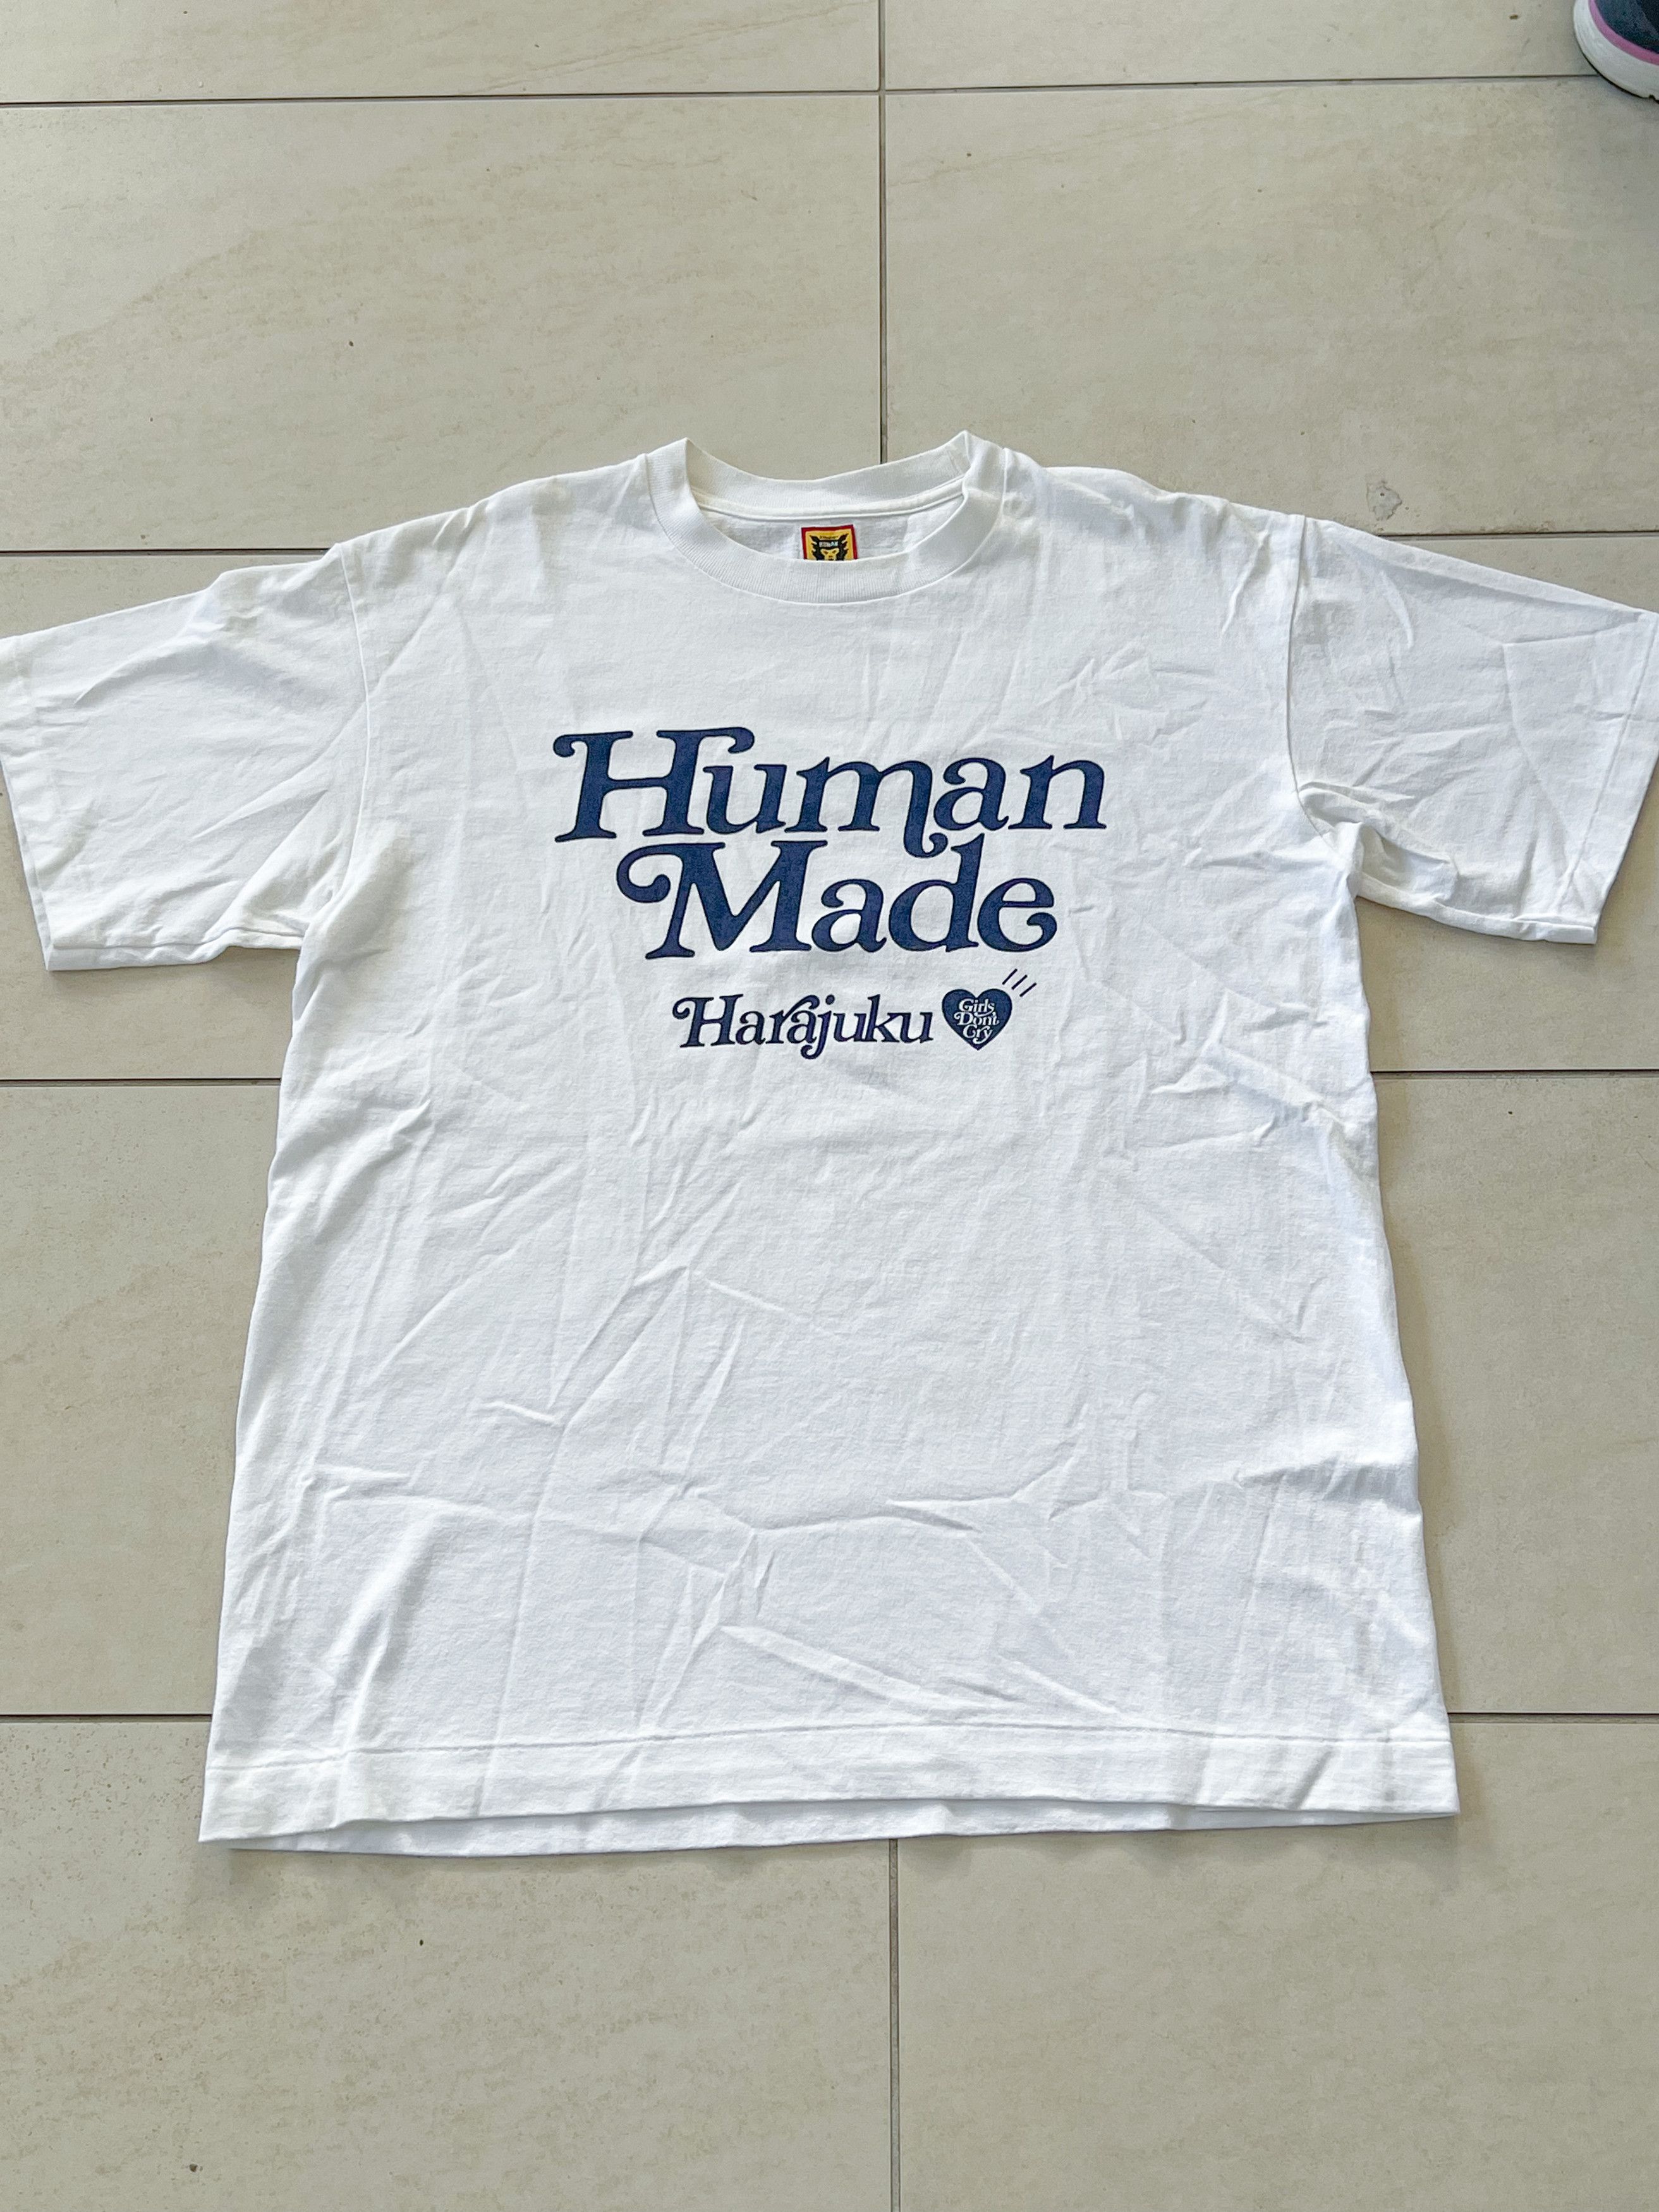 Human Made Human Made x Girls Don't Cry Harajuku Exclusive Tee | Grailed